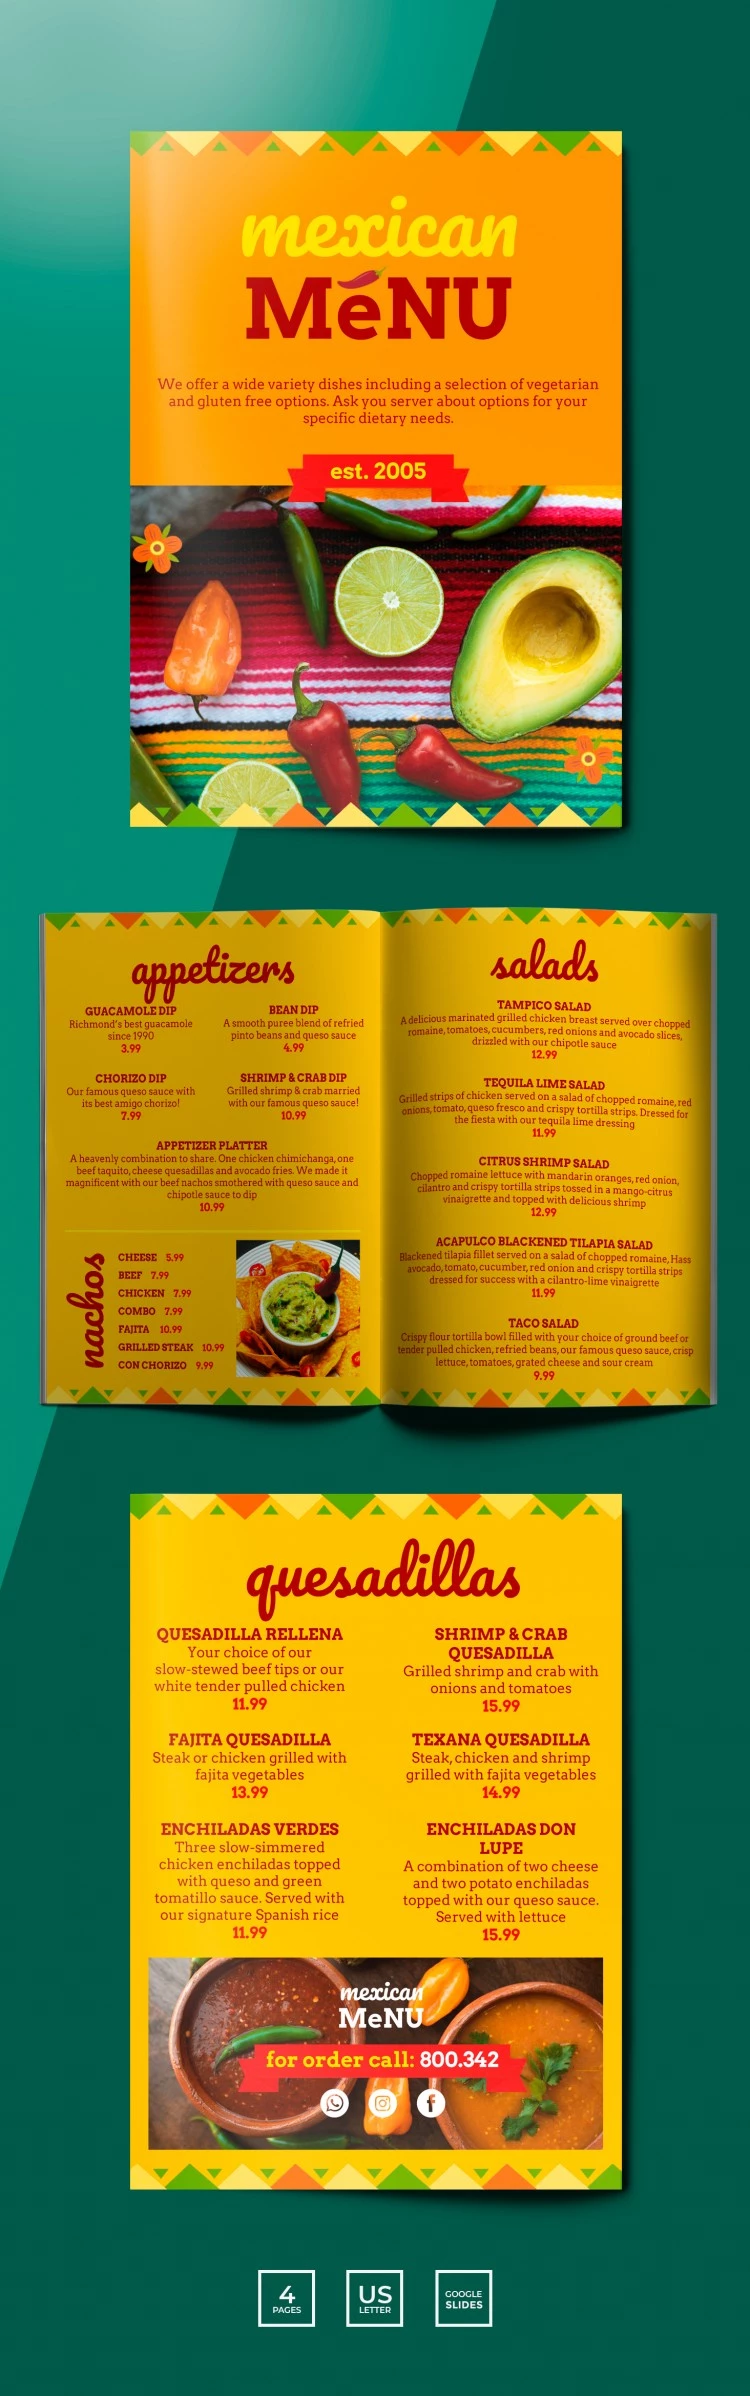 Menú del restaurante mexicano - free Google Docs Template - 10061696